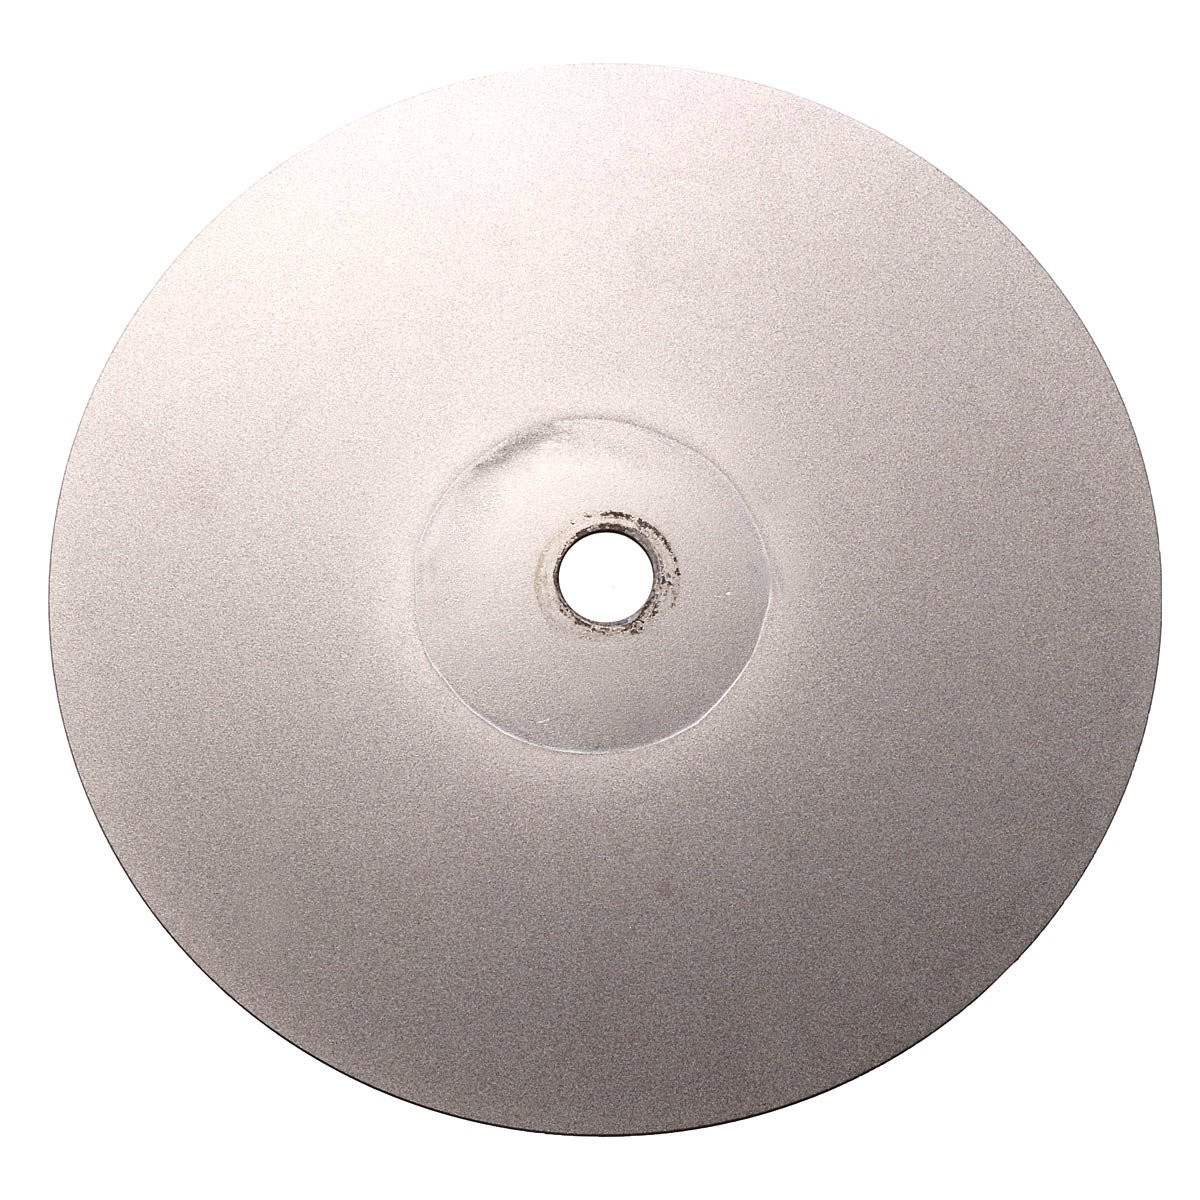 New 3Pcs 150mm 6" Inch Diamond Grinding Wheel Grit 240# 600# 3000# Flat Lap Disk Wheel Grinding Pad Tool Power Tool Accessories